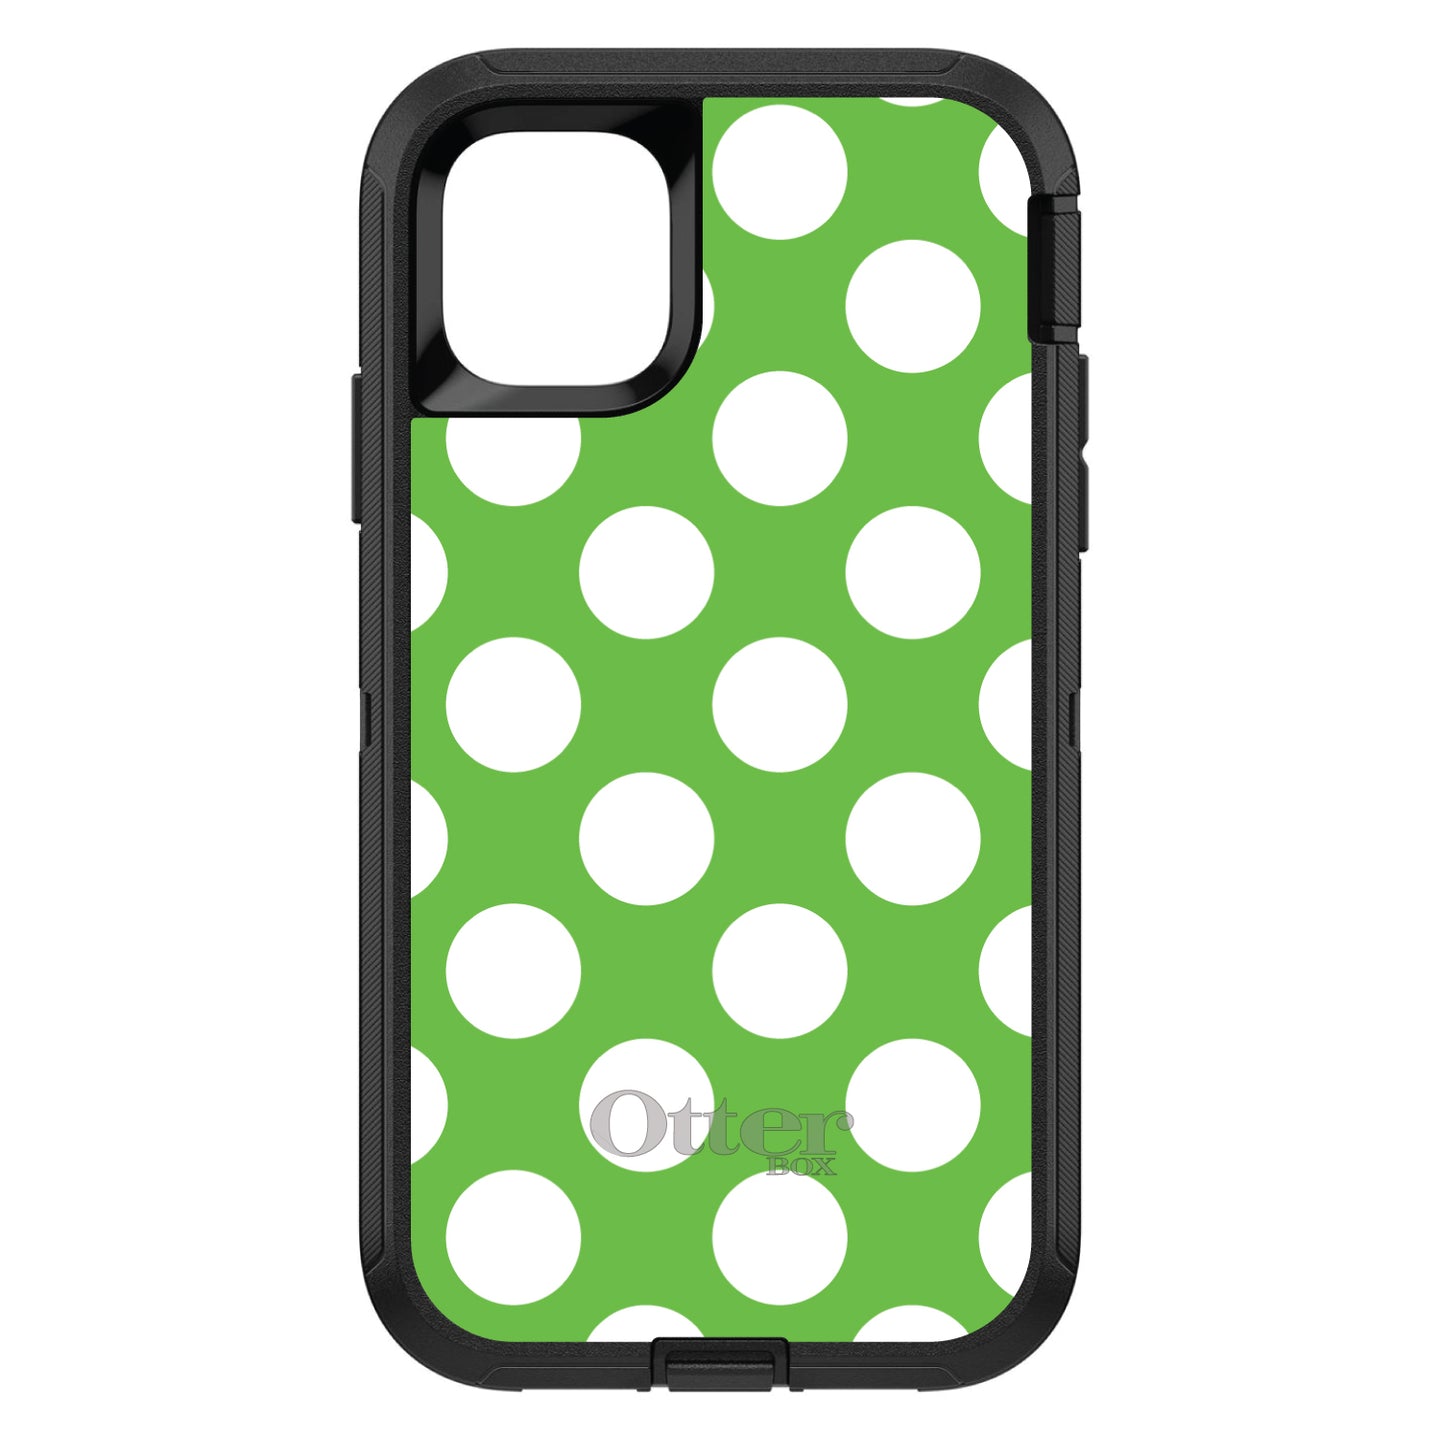 DistinctInk™ OtterBox Defender Series Case for Apple iPhone / Samsung Galaxy / Google Pixel - White & Green Polka Dots